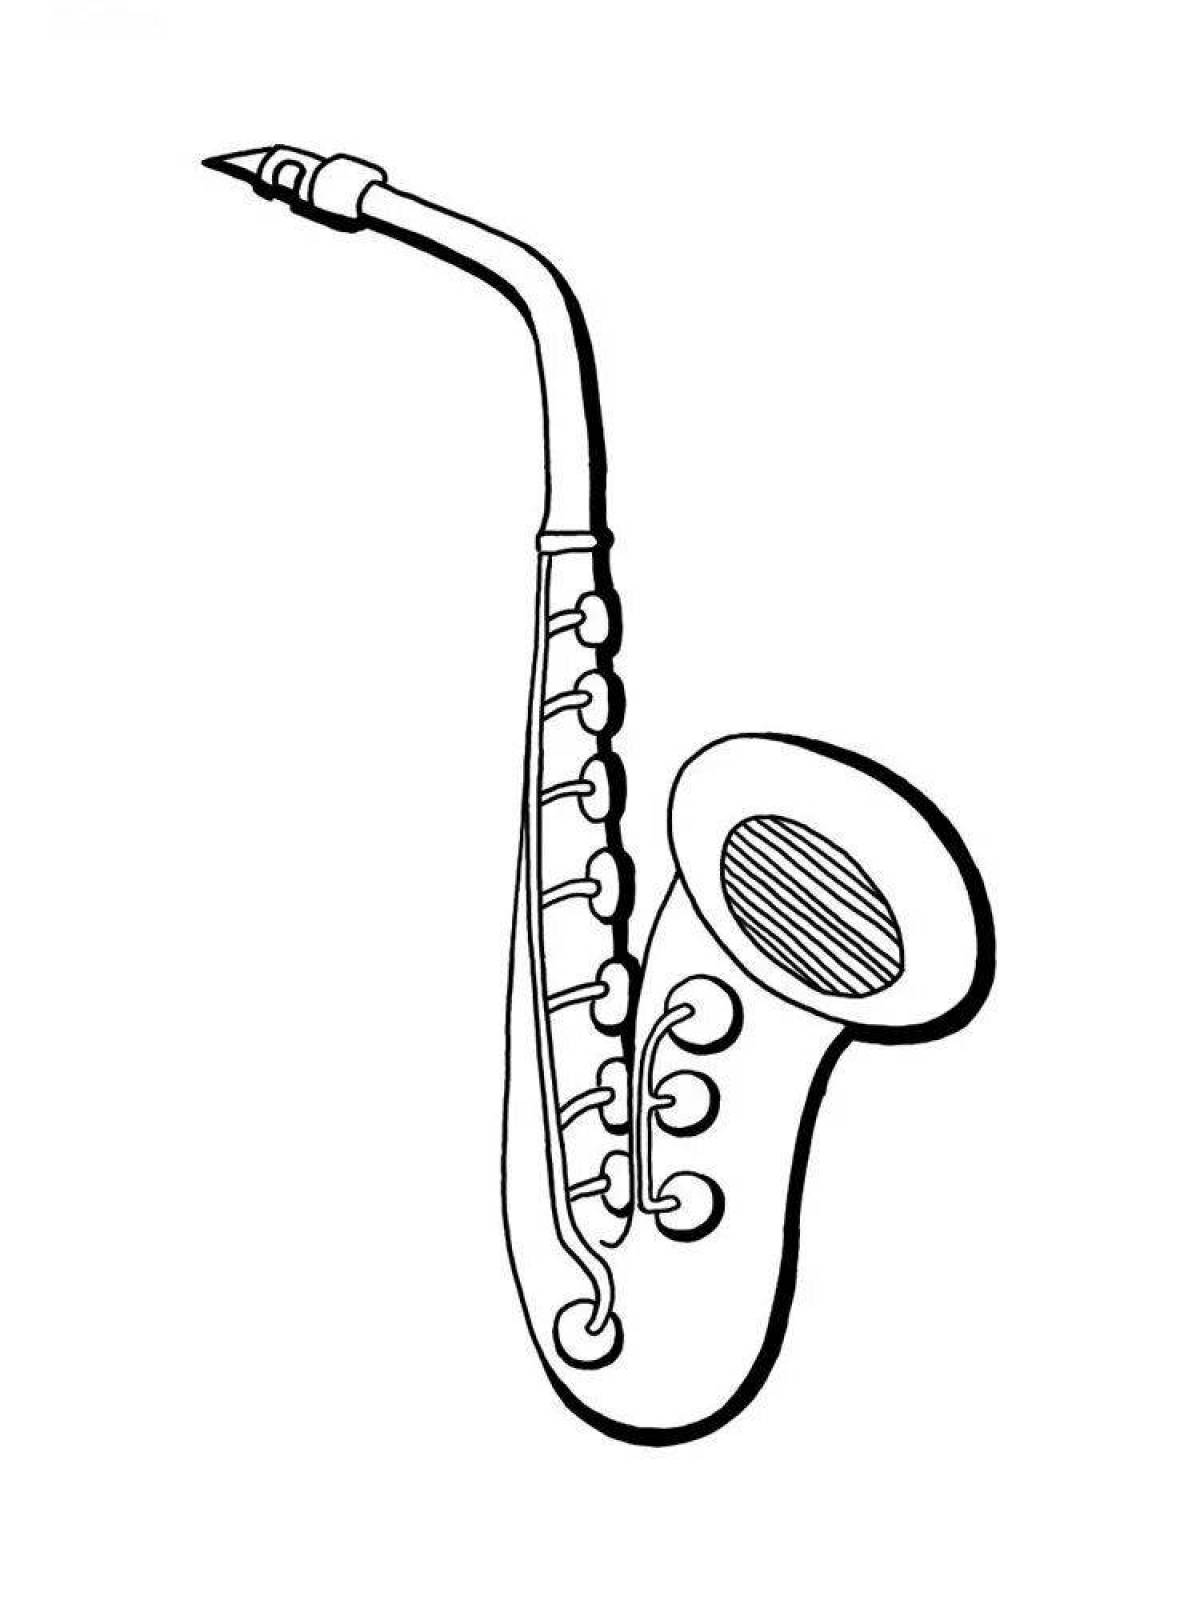 Coloring page joyful saxophone